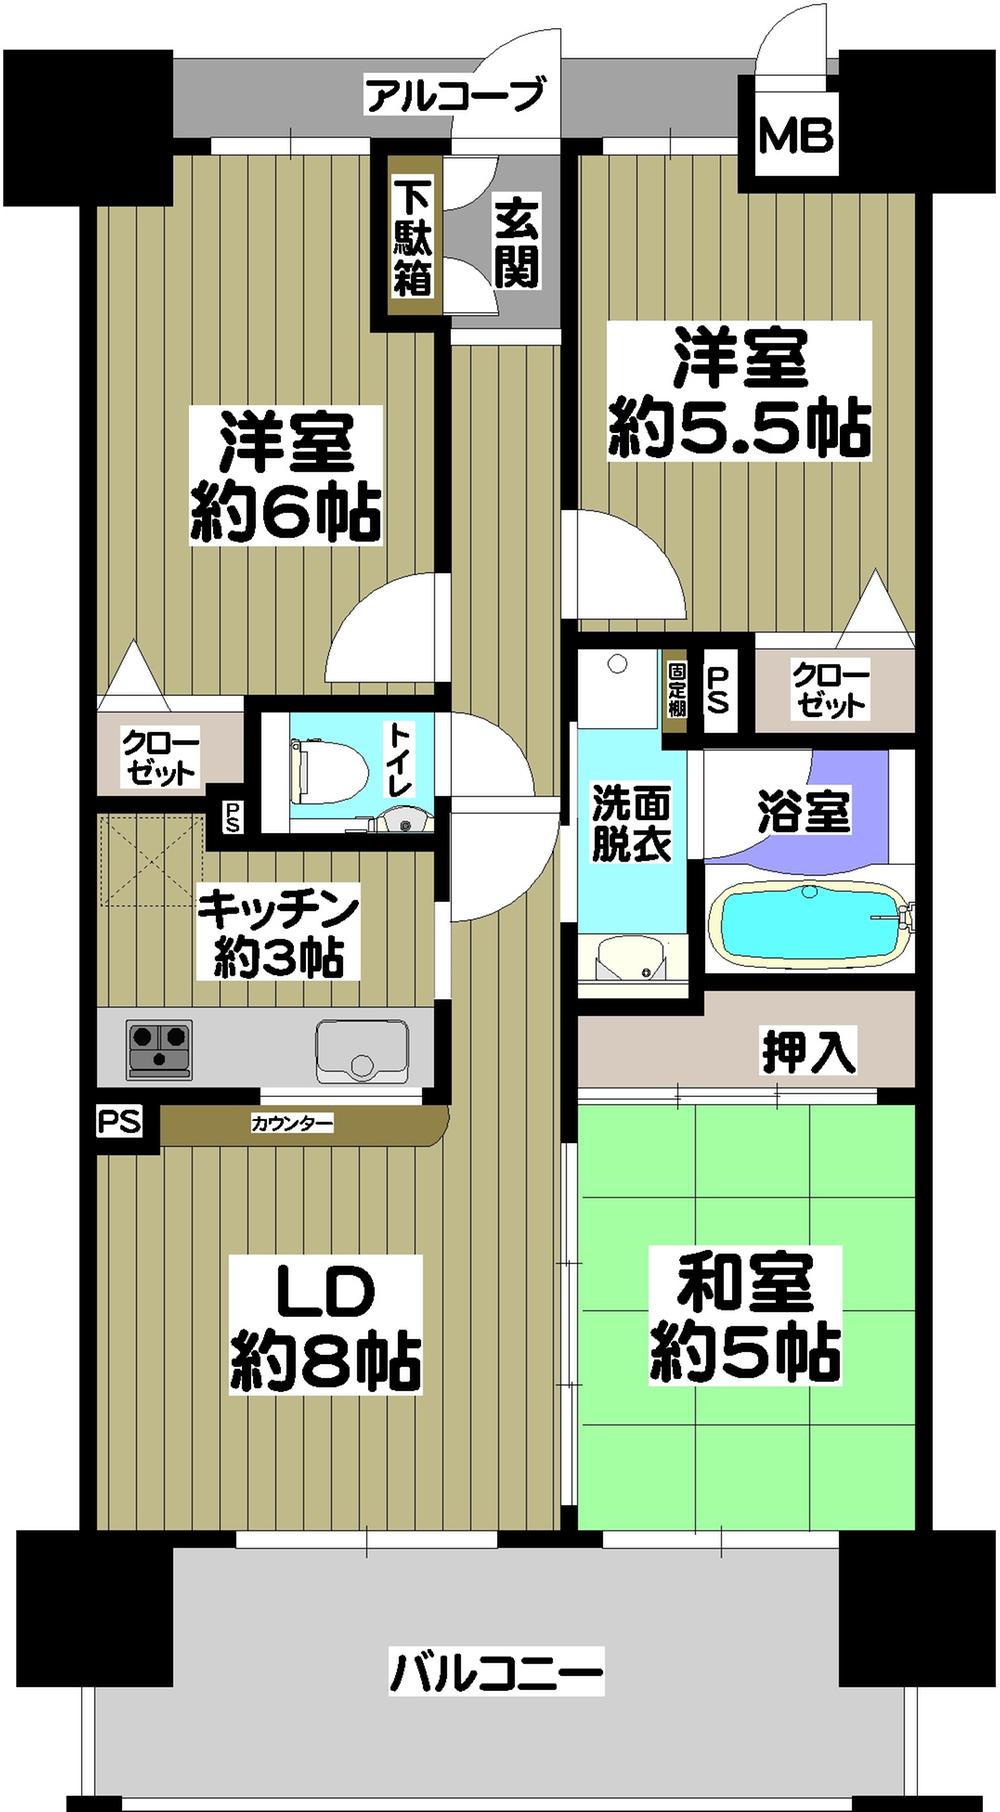 Floor plan. 3LDK, Price 19,800,000 yen, Occupied area 60.54 sq m , Balcony area 11.4 sq m